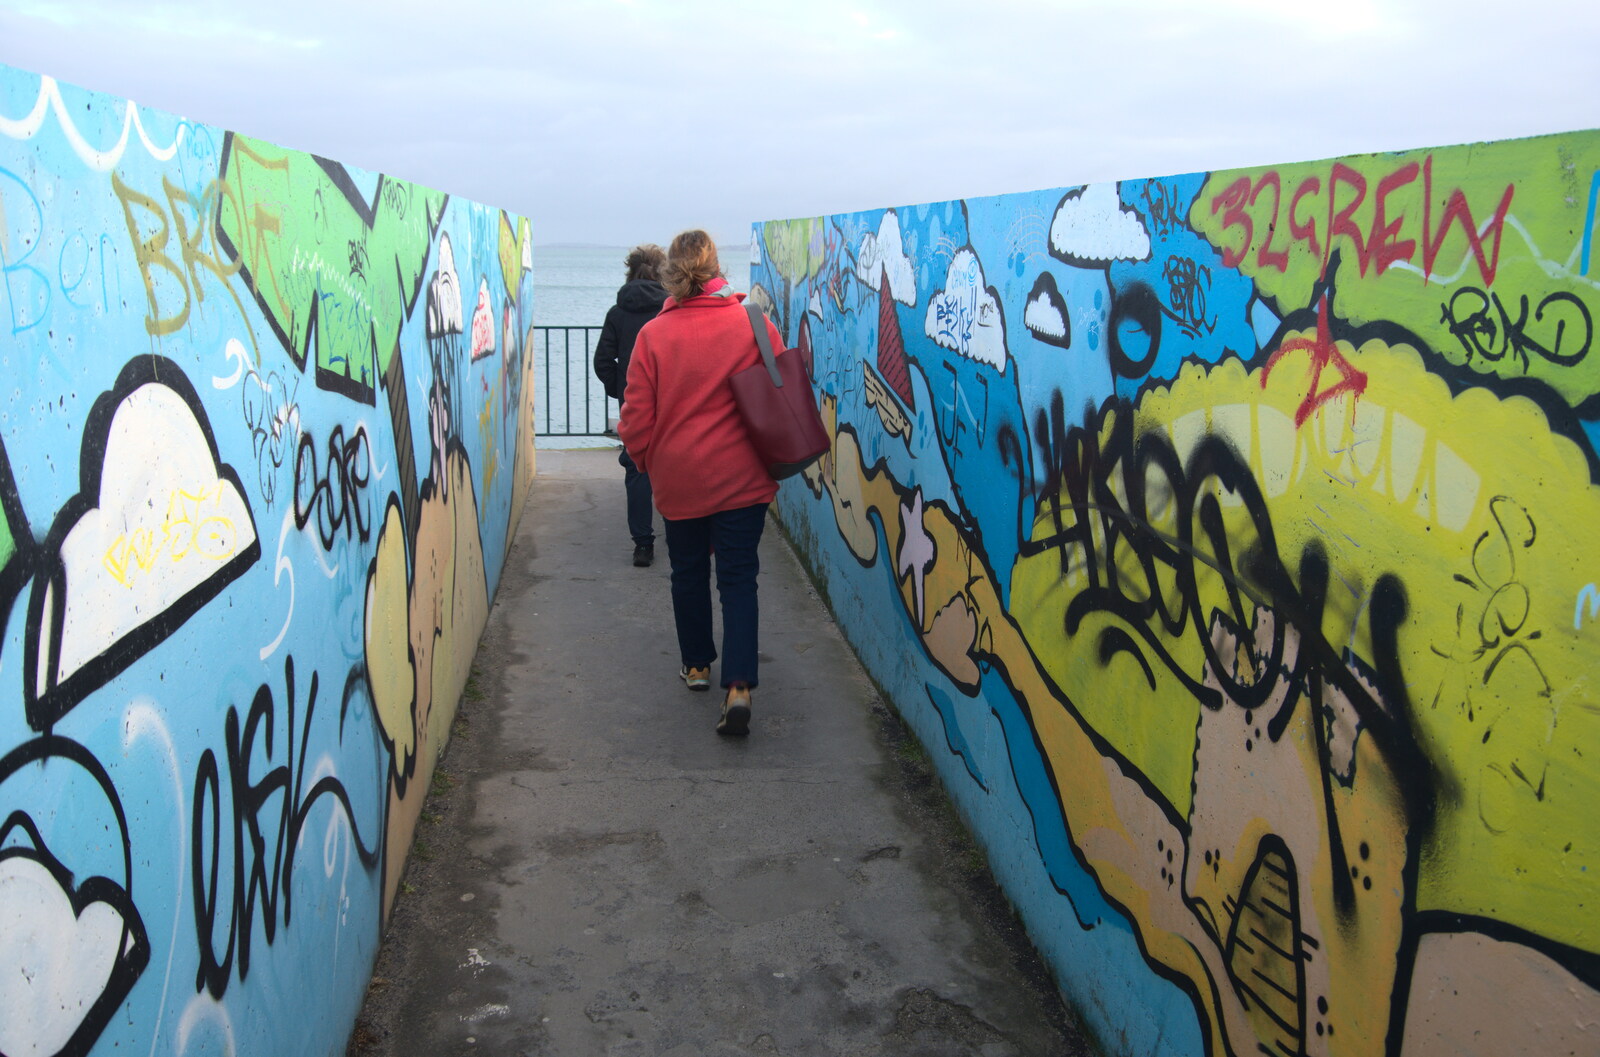 The Dead Zoo, Dublin, Ireland - 17th February 2023: We cross over the rails on a graffiti bridge